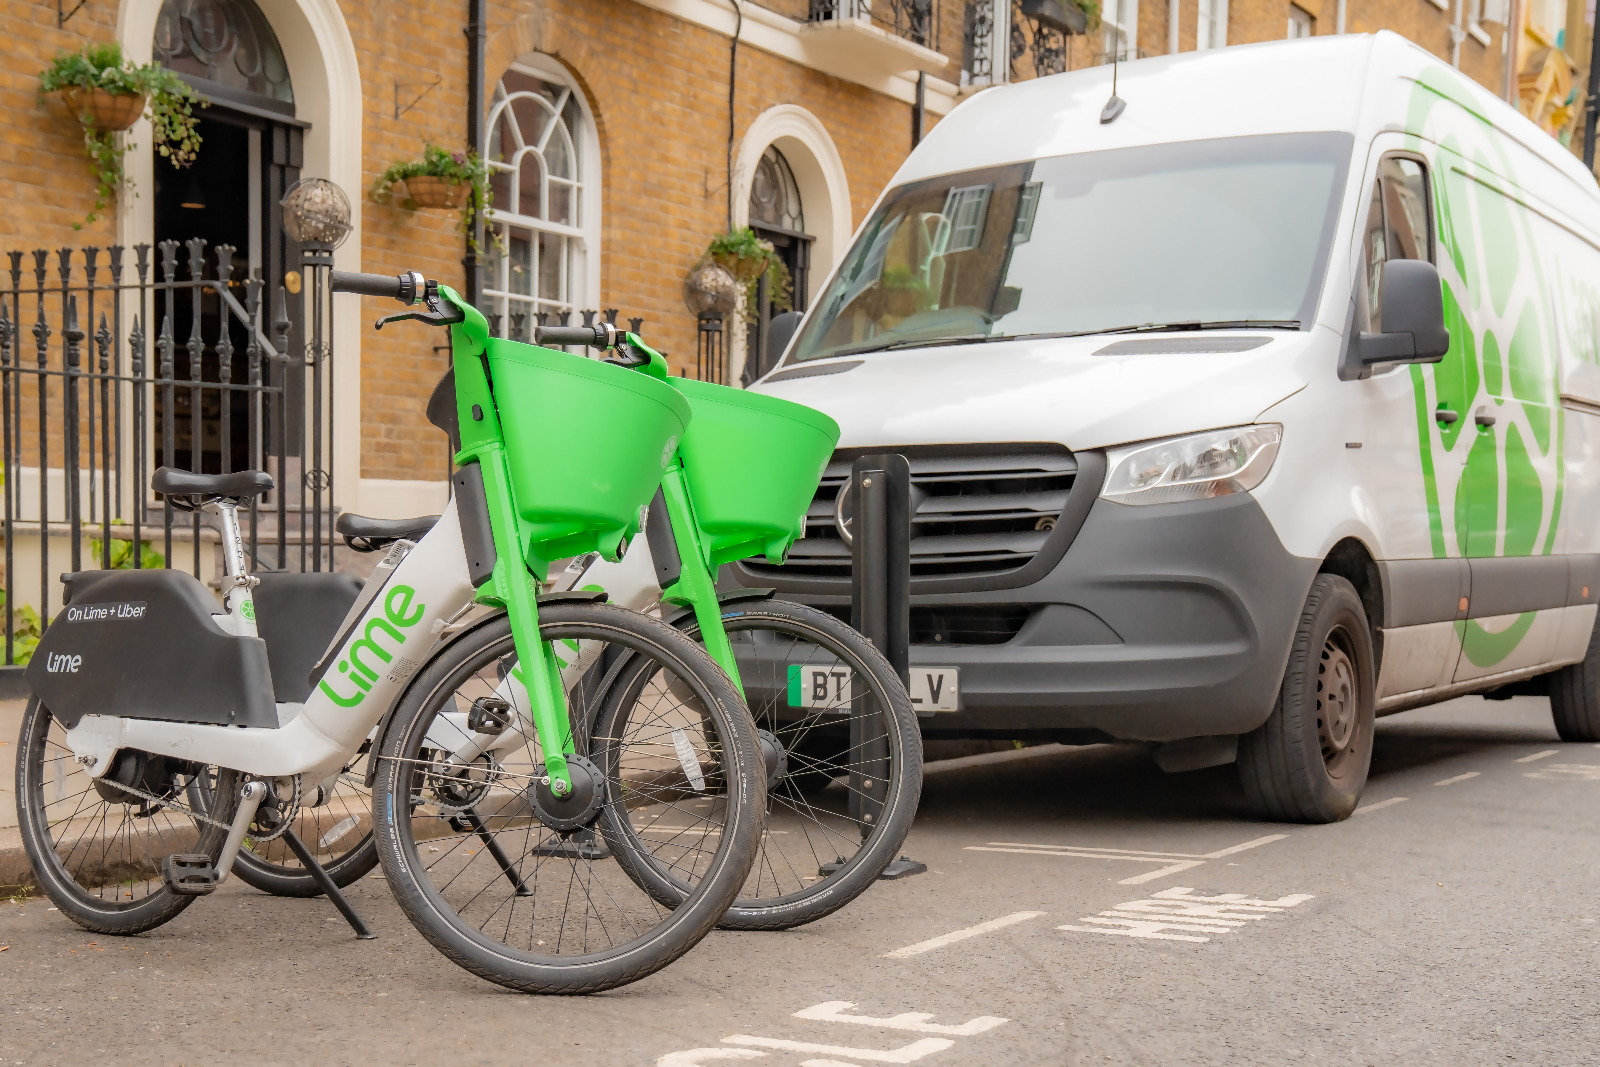 Lime bikes London in London